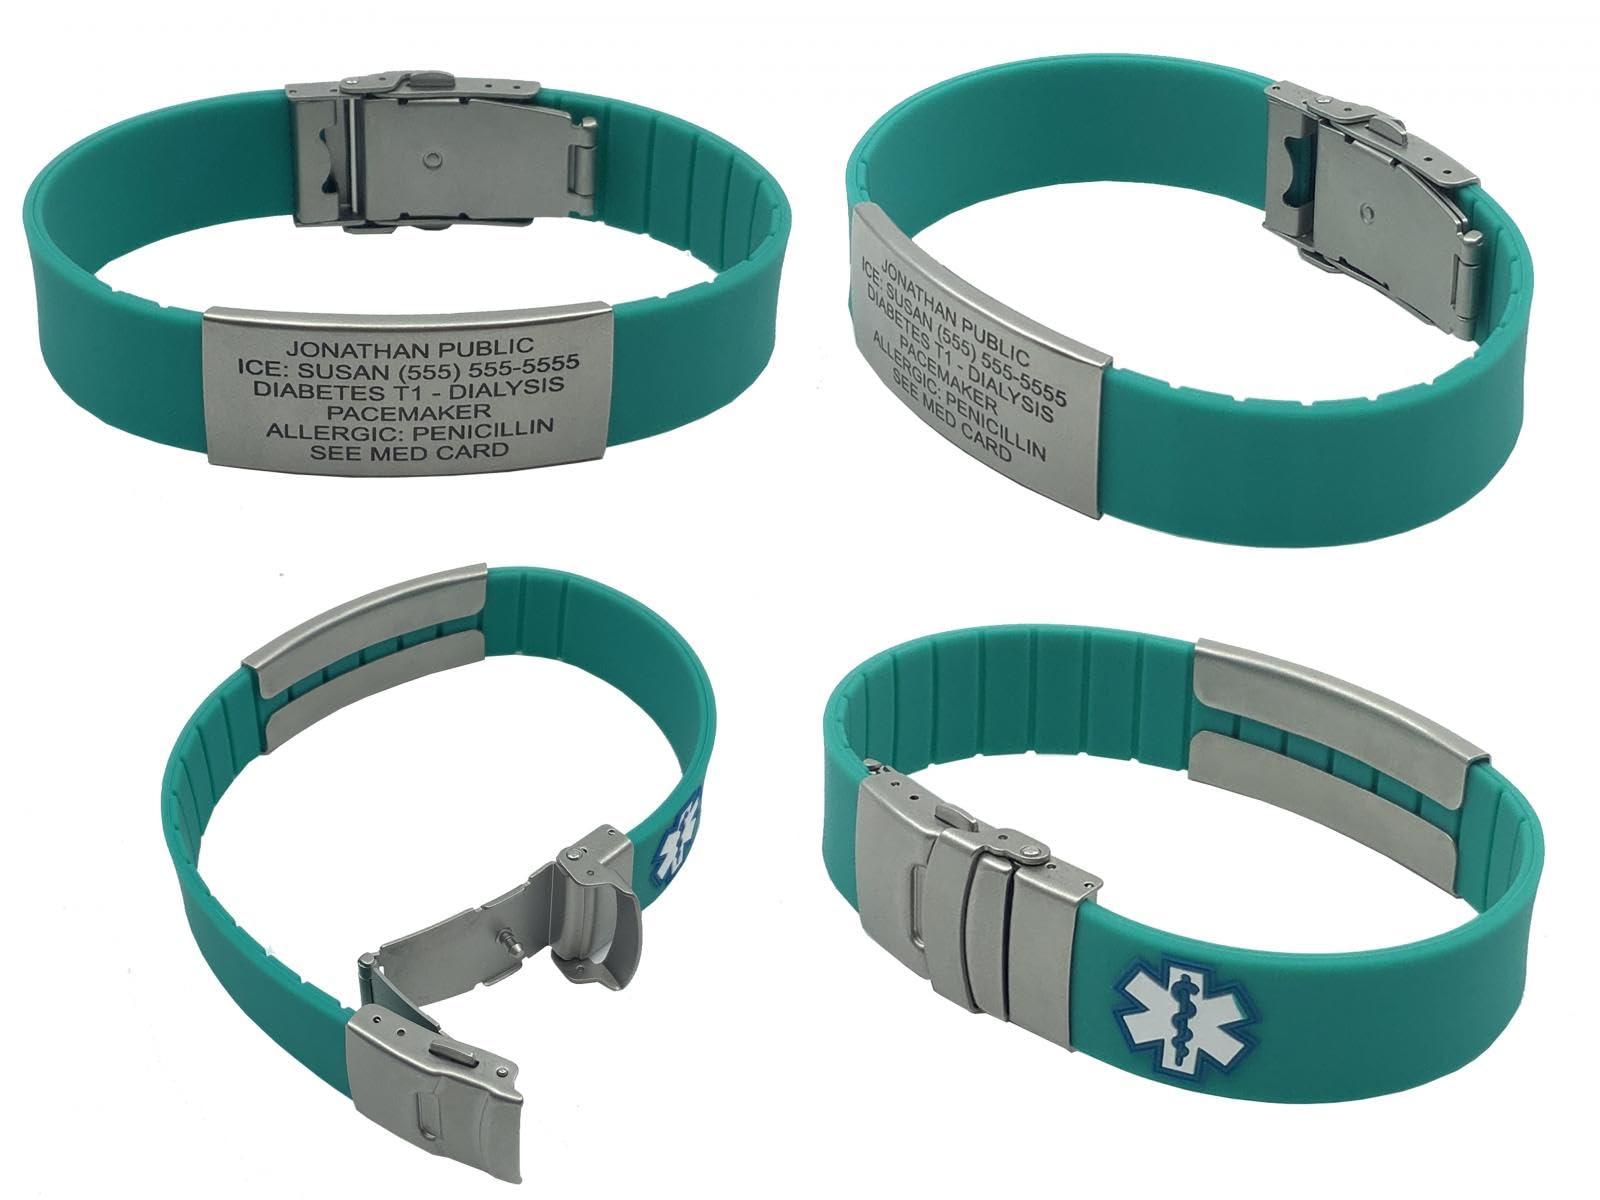 Universal Medical Data Sport Medical Bracelets for Men and Women, Personalized Engraving, Emergency Medical Information Card for Wallet or Purse, Compl